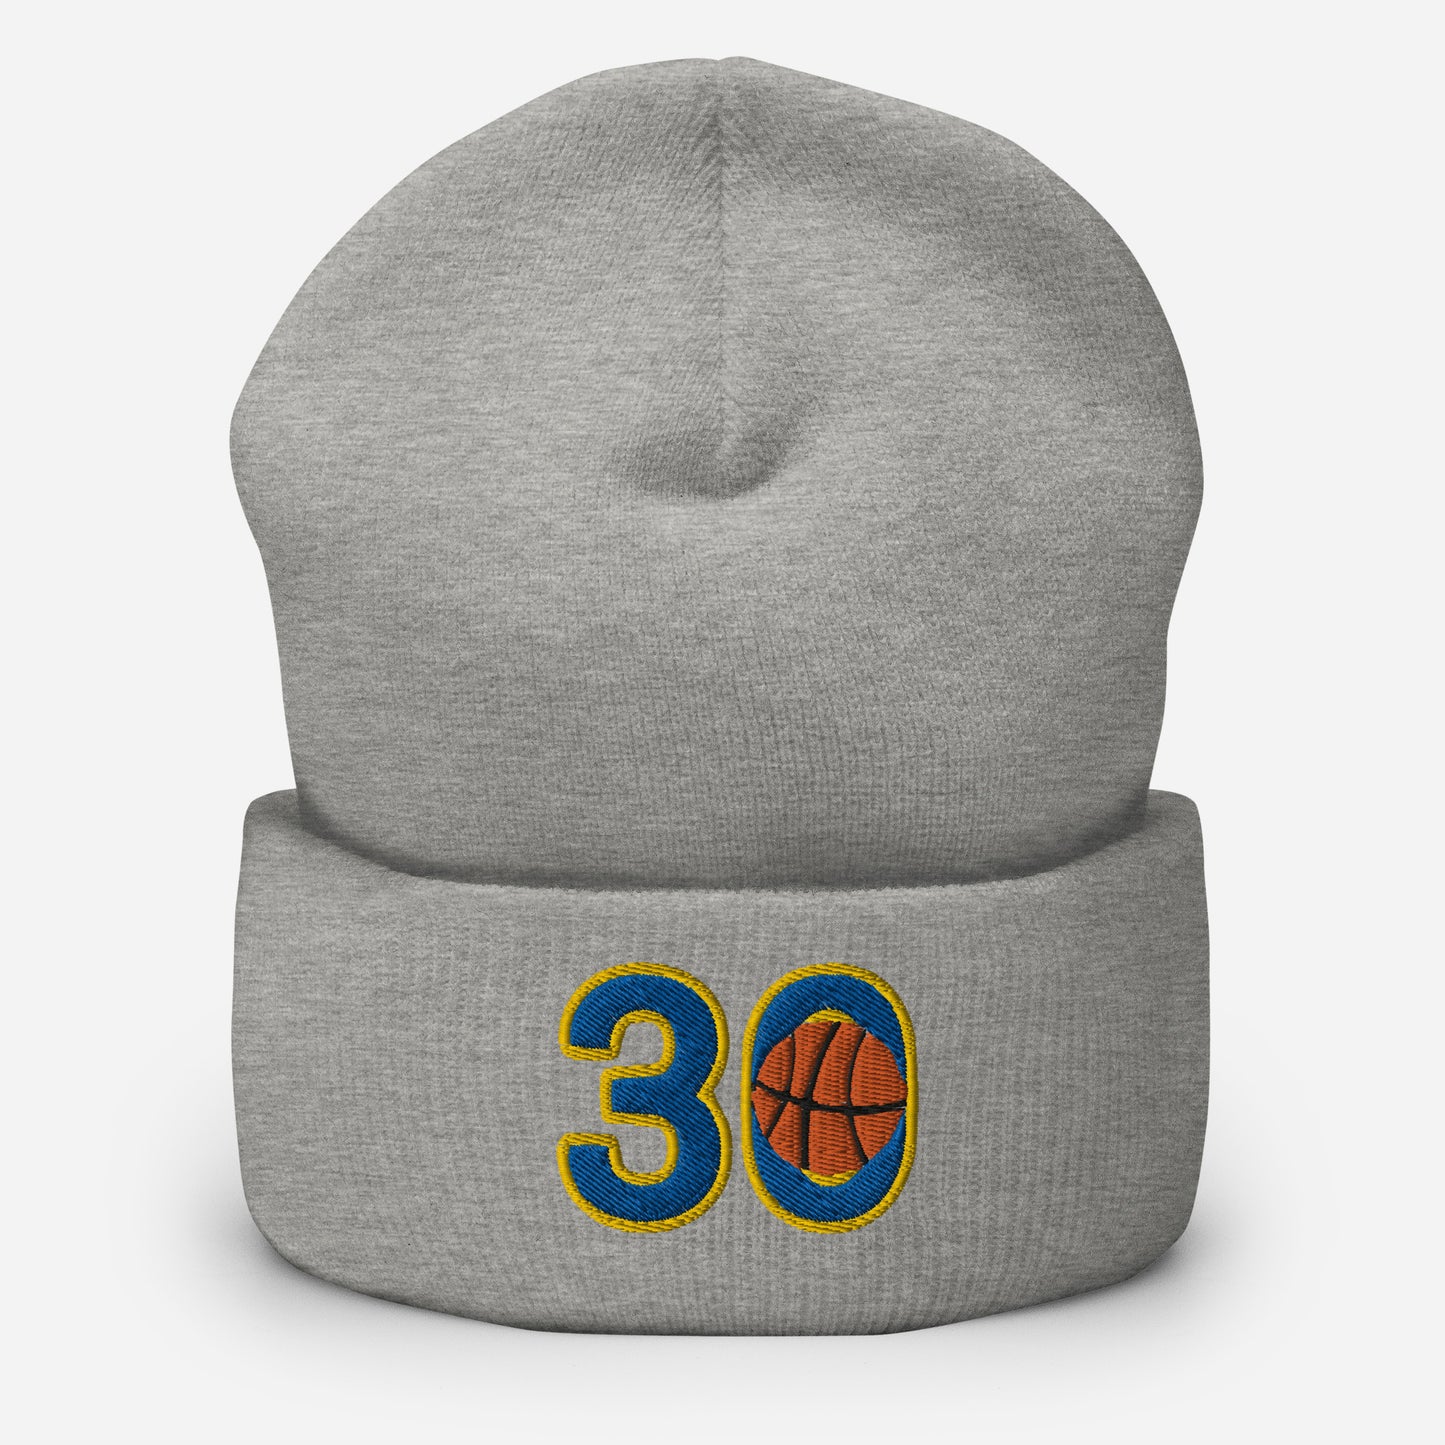 30 Hat / 30 Basketball Hat / 30 Steph Hat / Curry 30 Cuffed Beanie